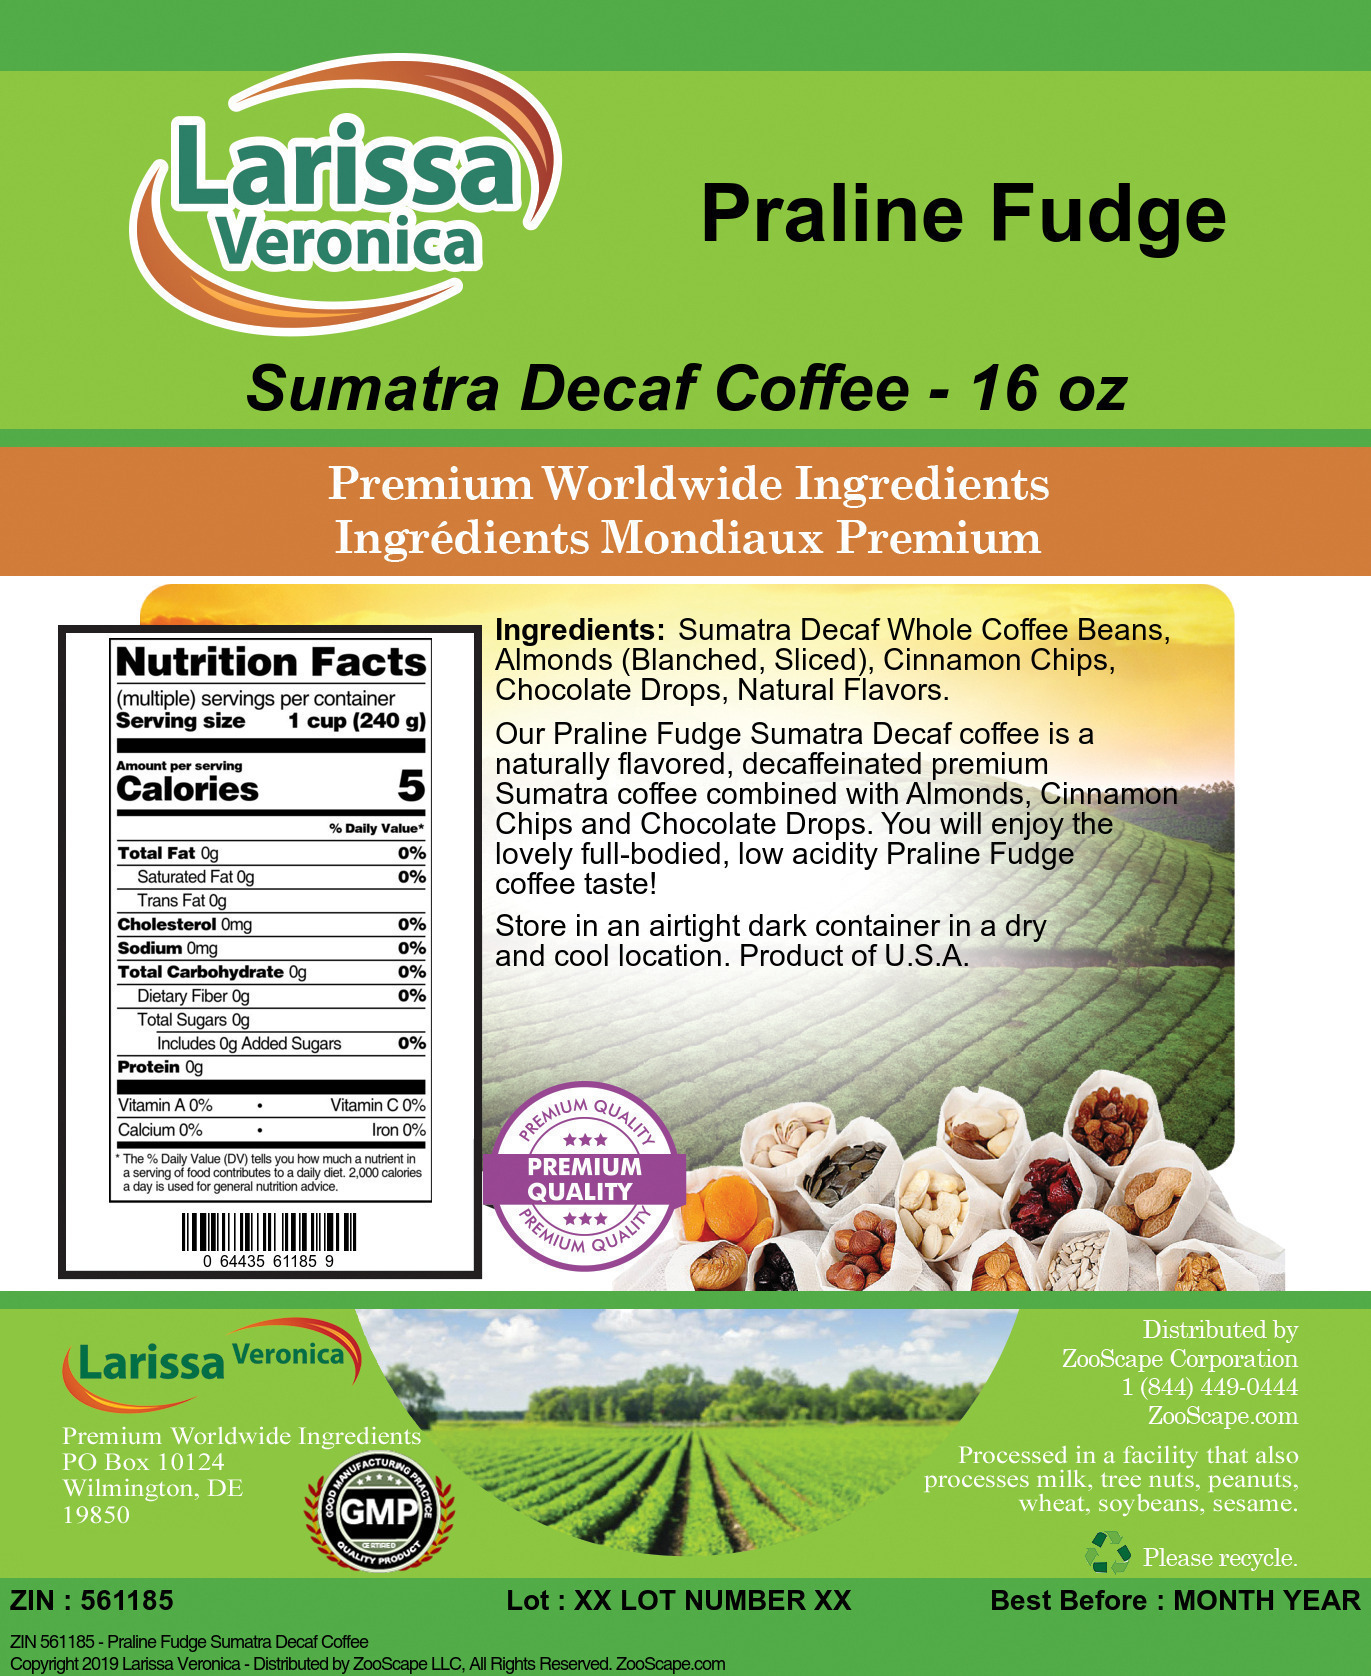 Praline Fudge Sumatra Decaf Coffee - Label